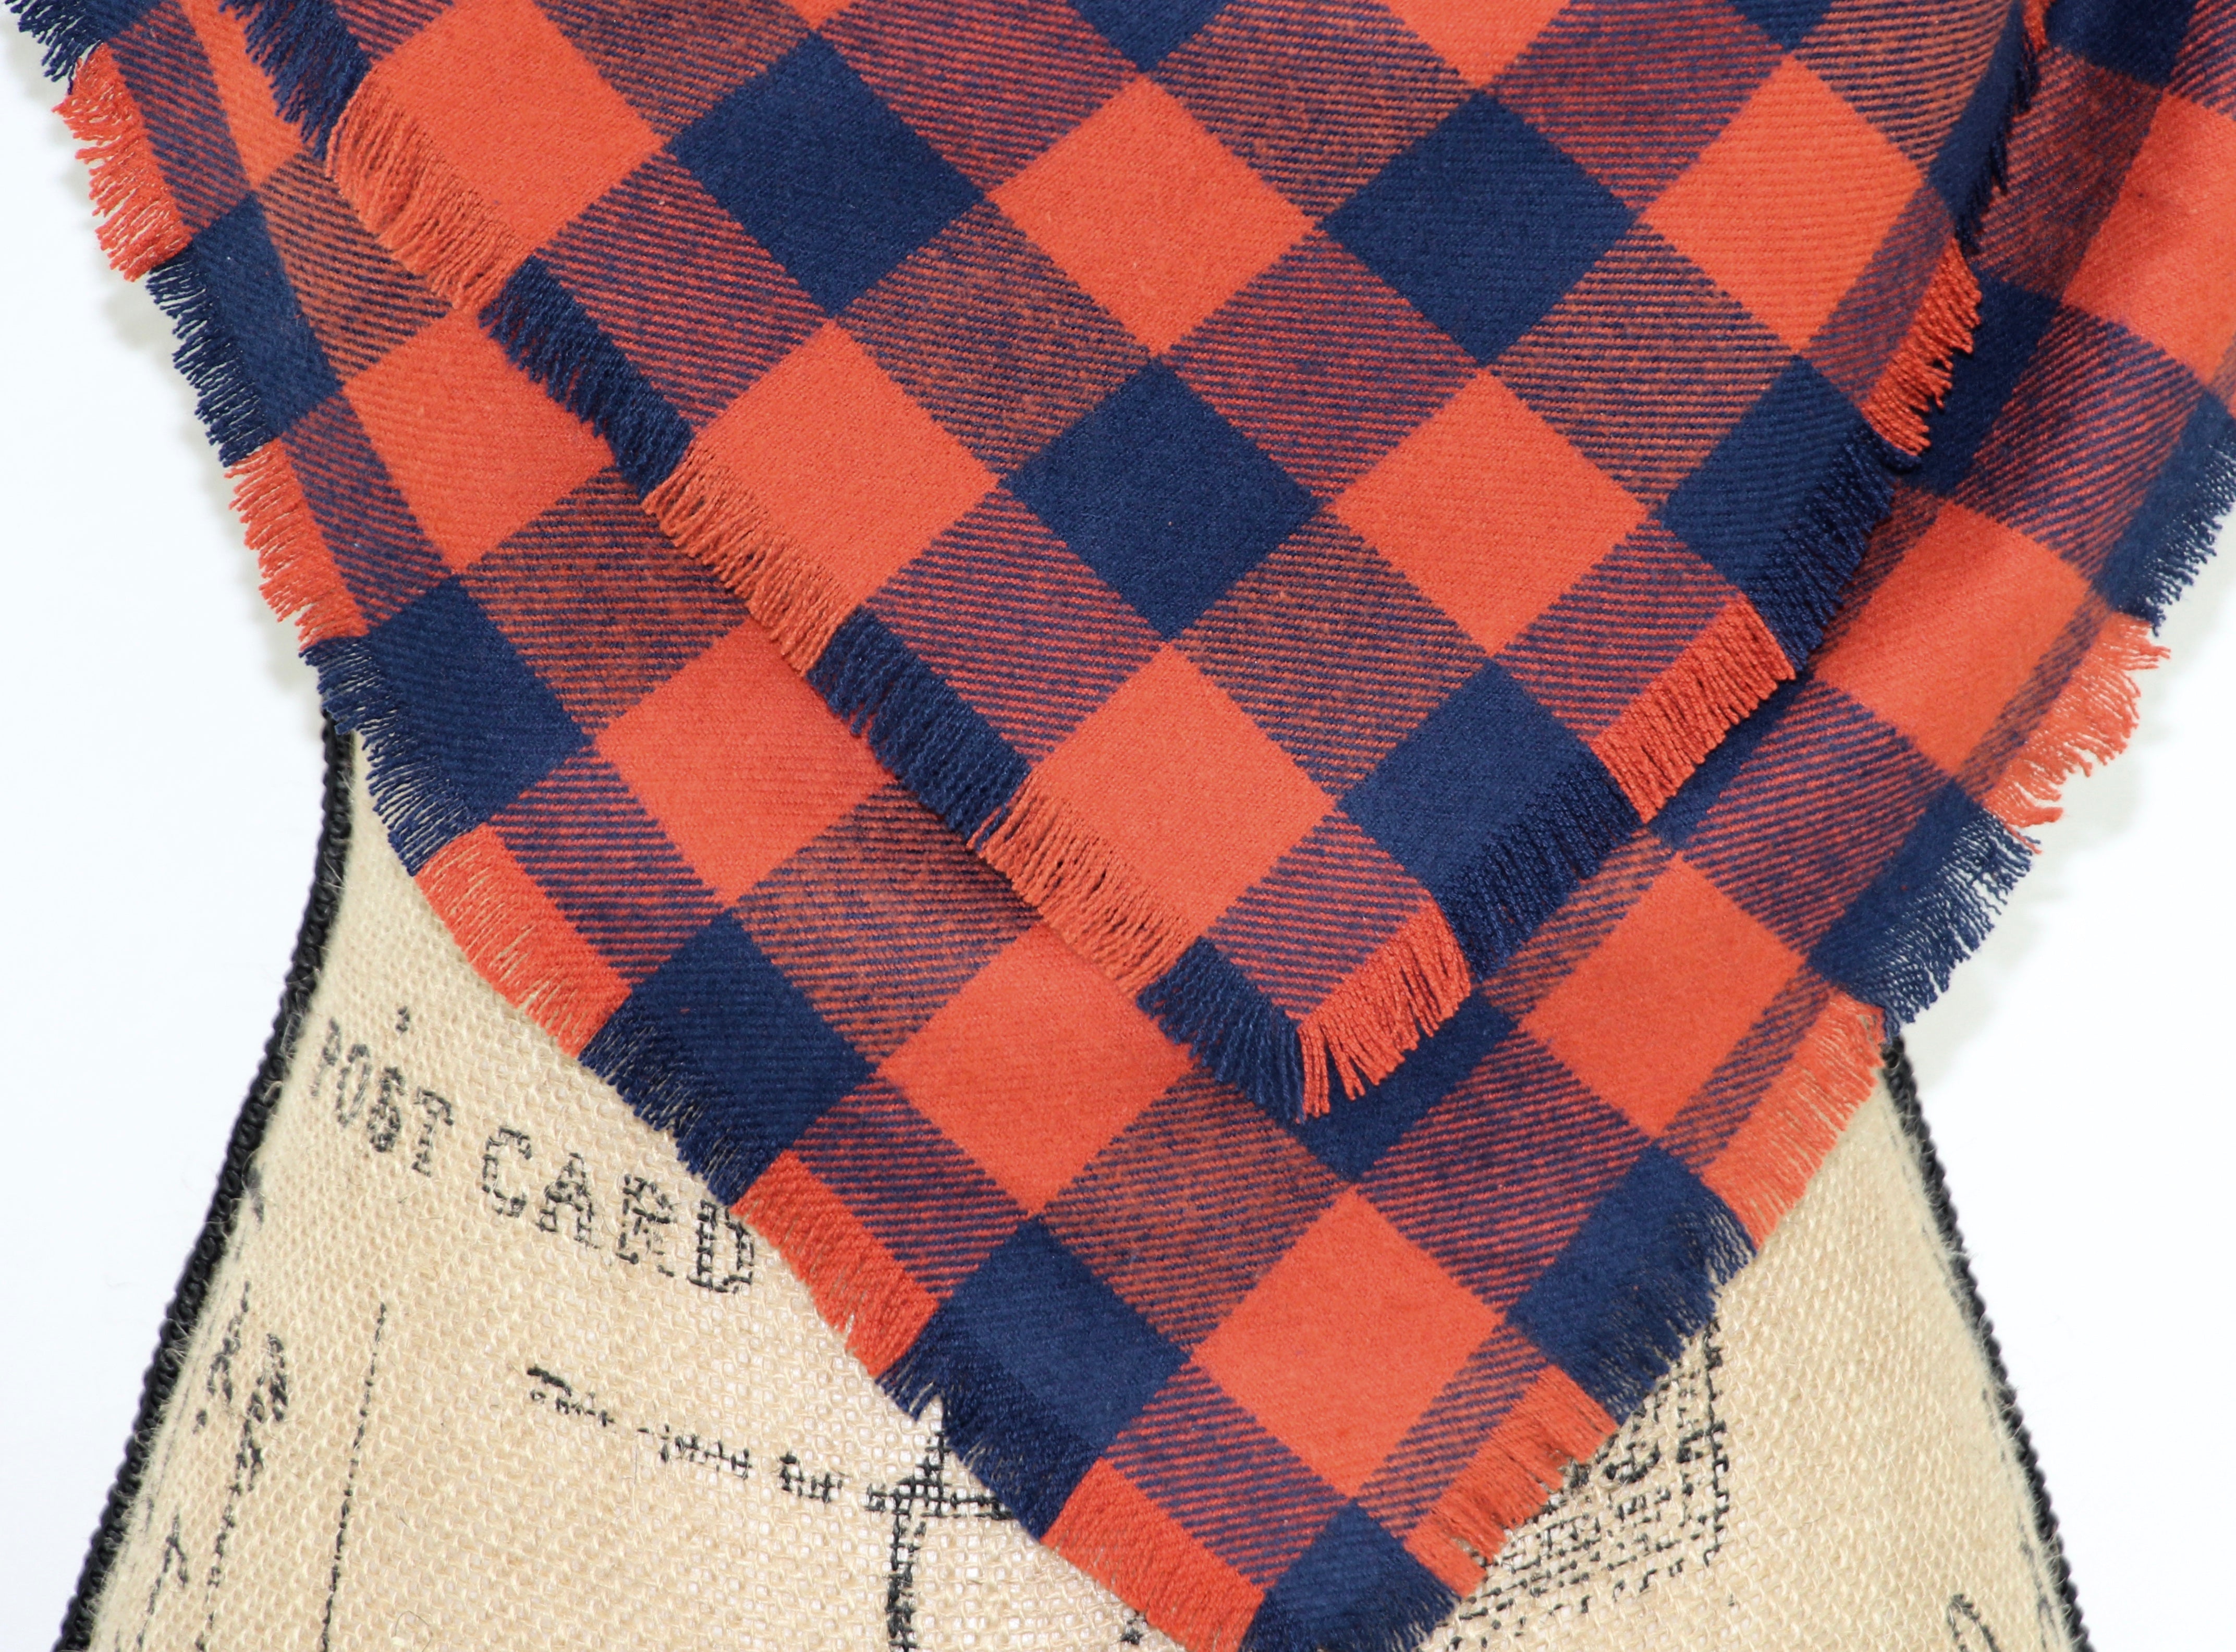 Classic Buffalo Plaid Gingham in Orange and Navy Blue Flannel Plaid Infinity Scarf or Blanket Scarf Tartan Wrap